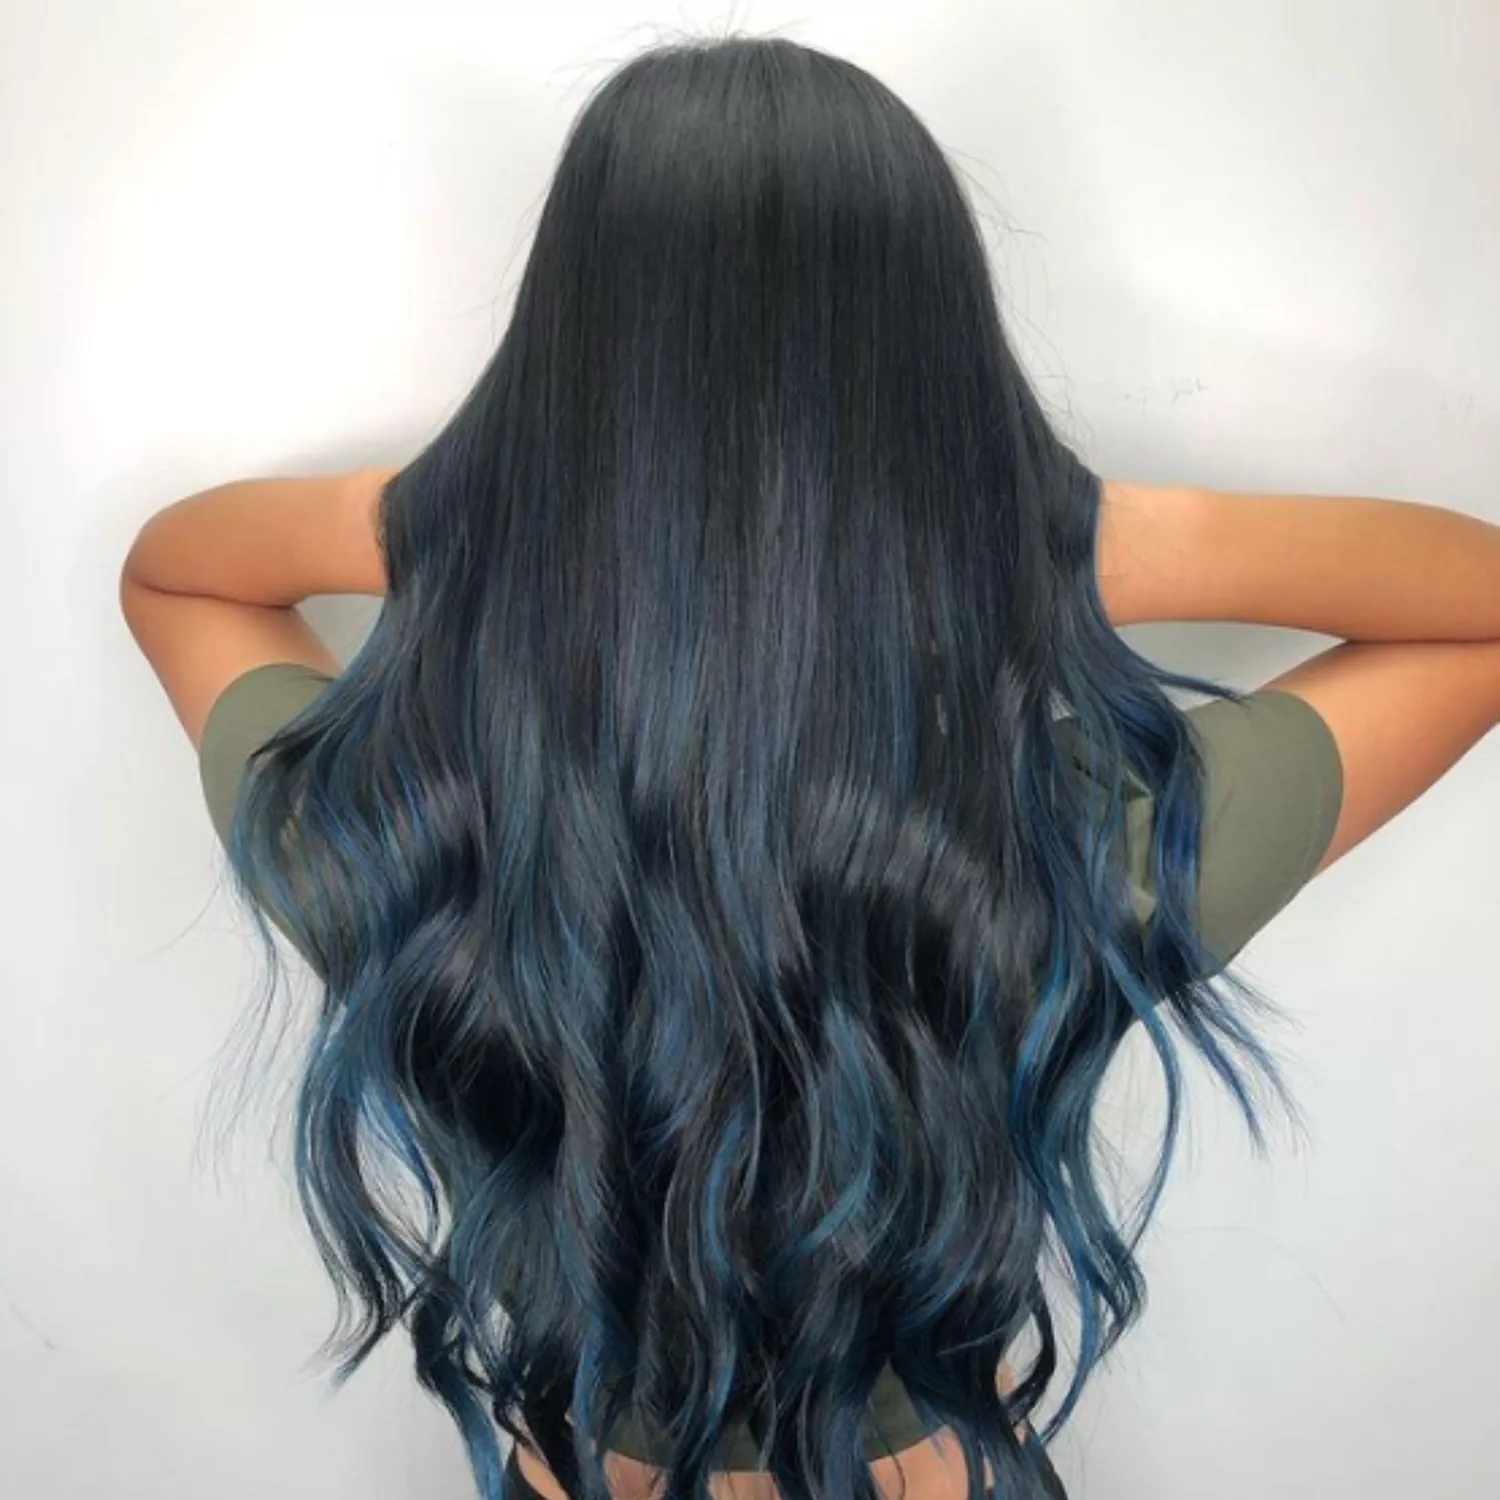 Blue-black Hair Color Ideas: Blue-lights hairstyles